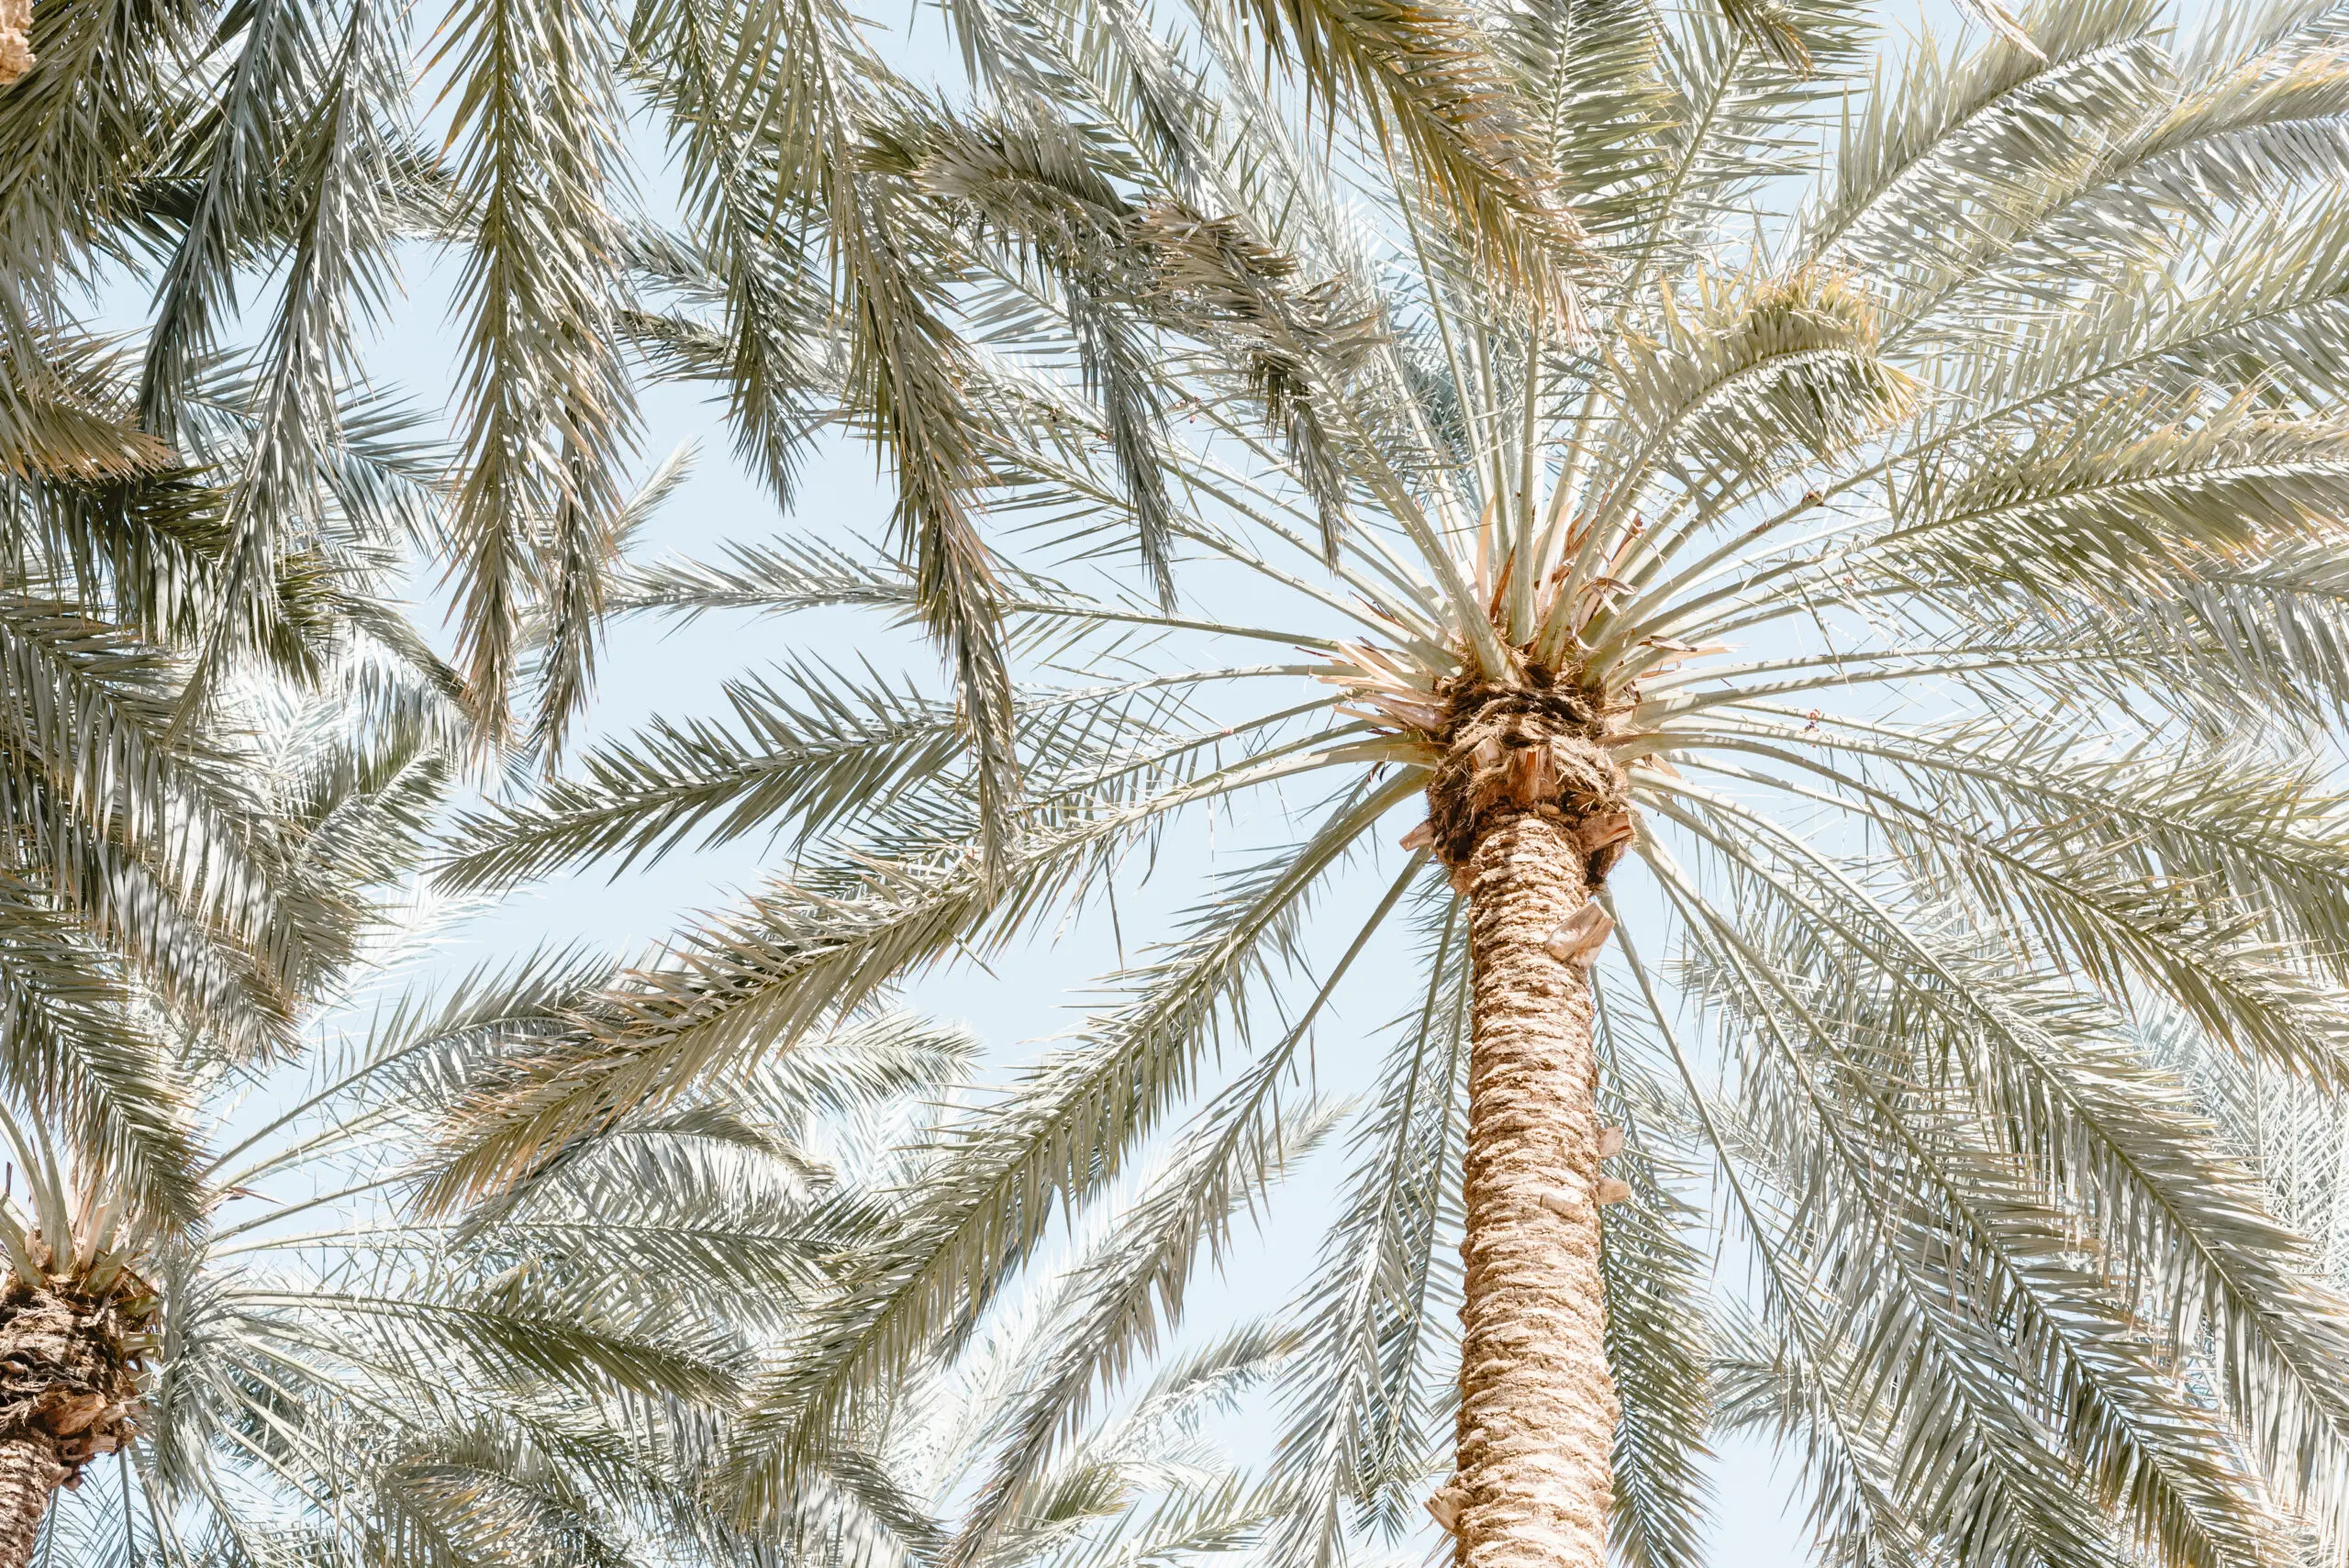 Wandbild (26295) Palm Trees with blue sky by Photolovers präsentiert: Natur